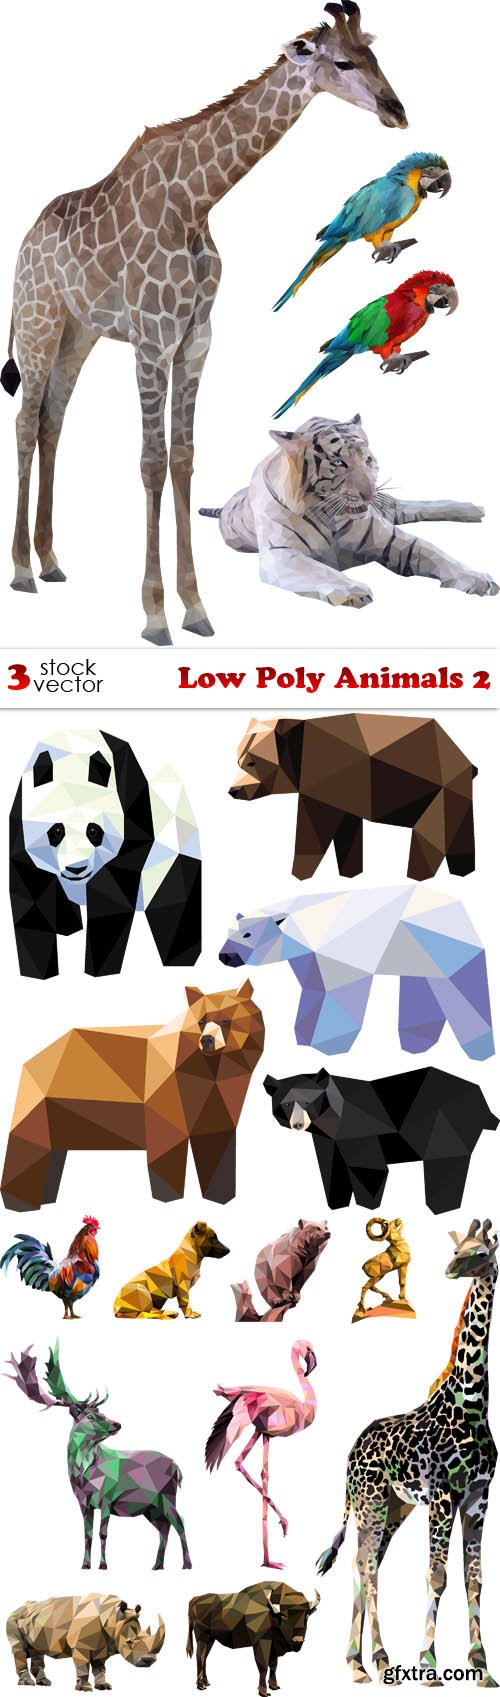 Vectors - Low Poly Animals 2